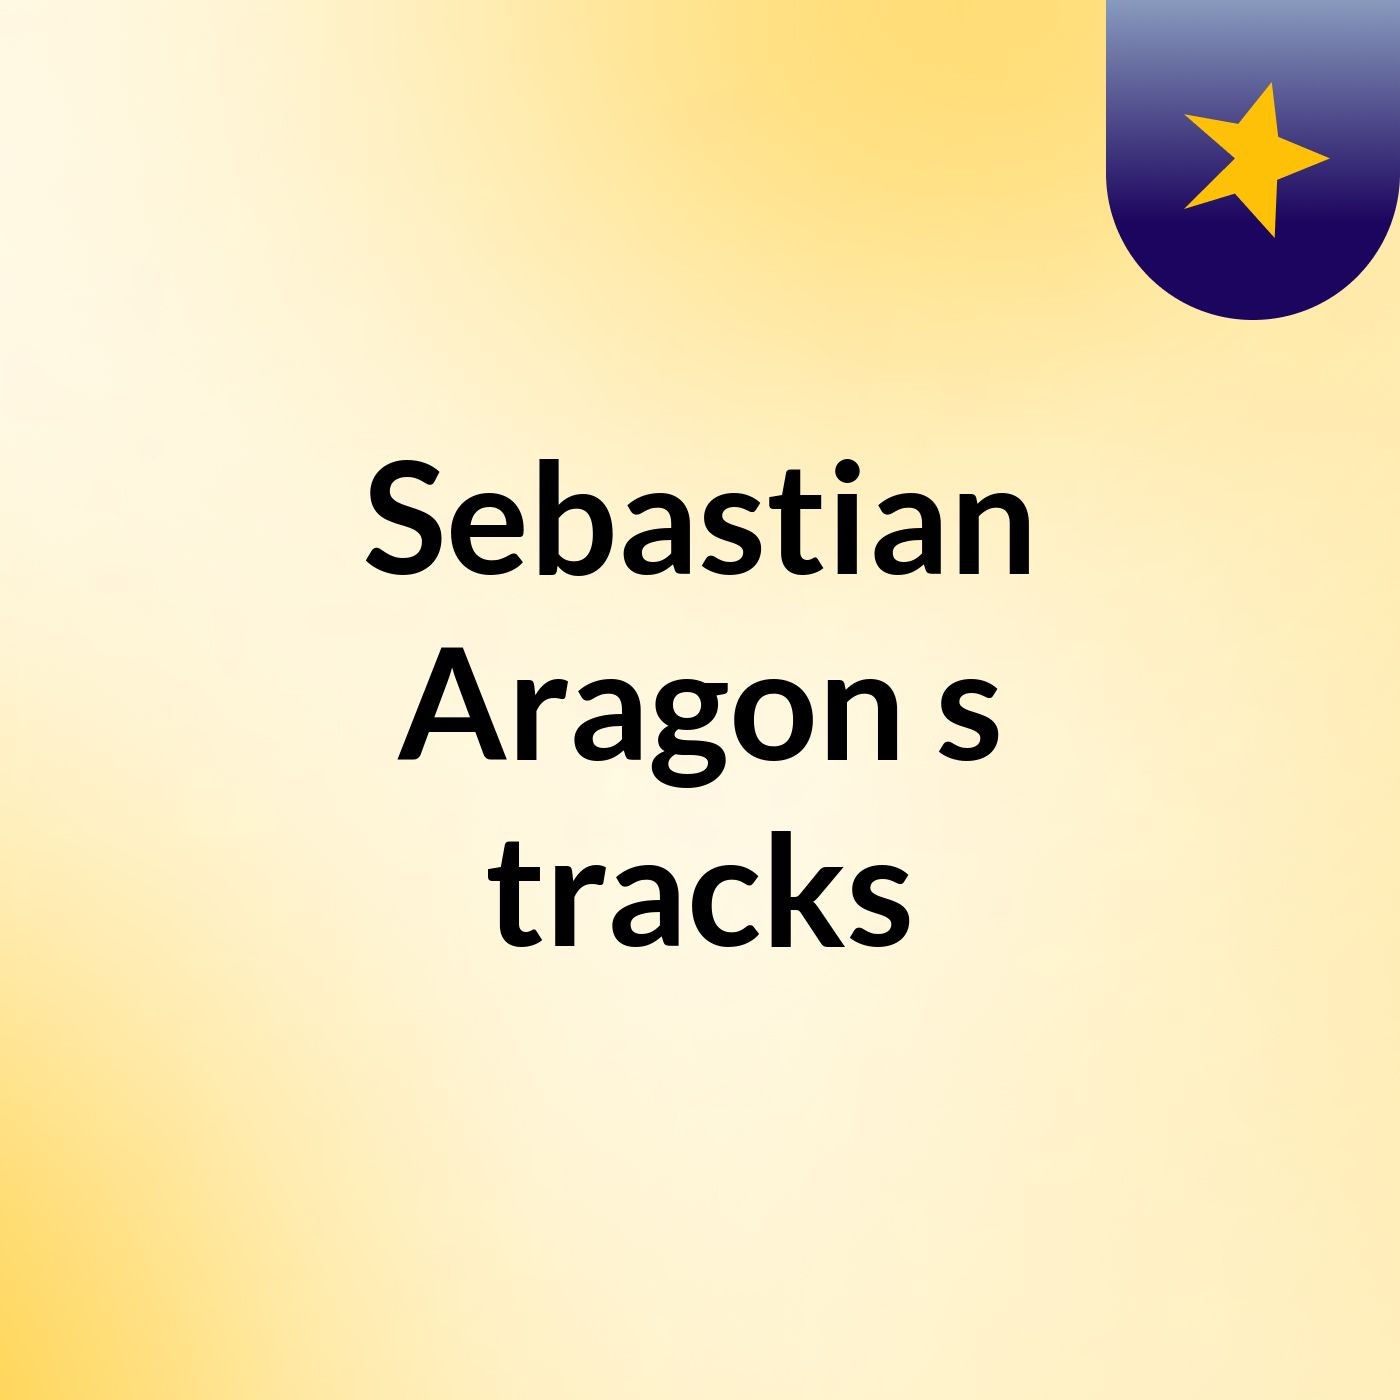 Sebastian Aragon's tracks